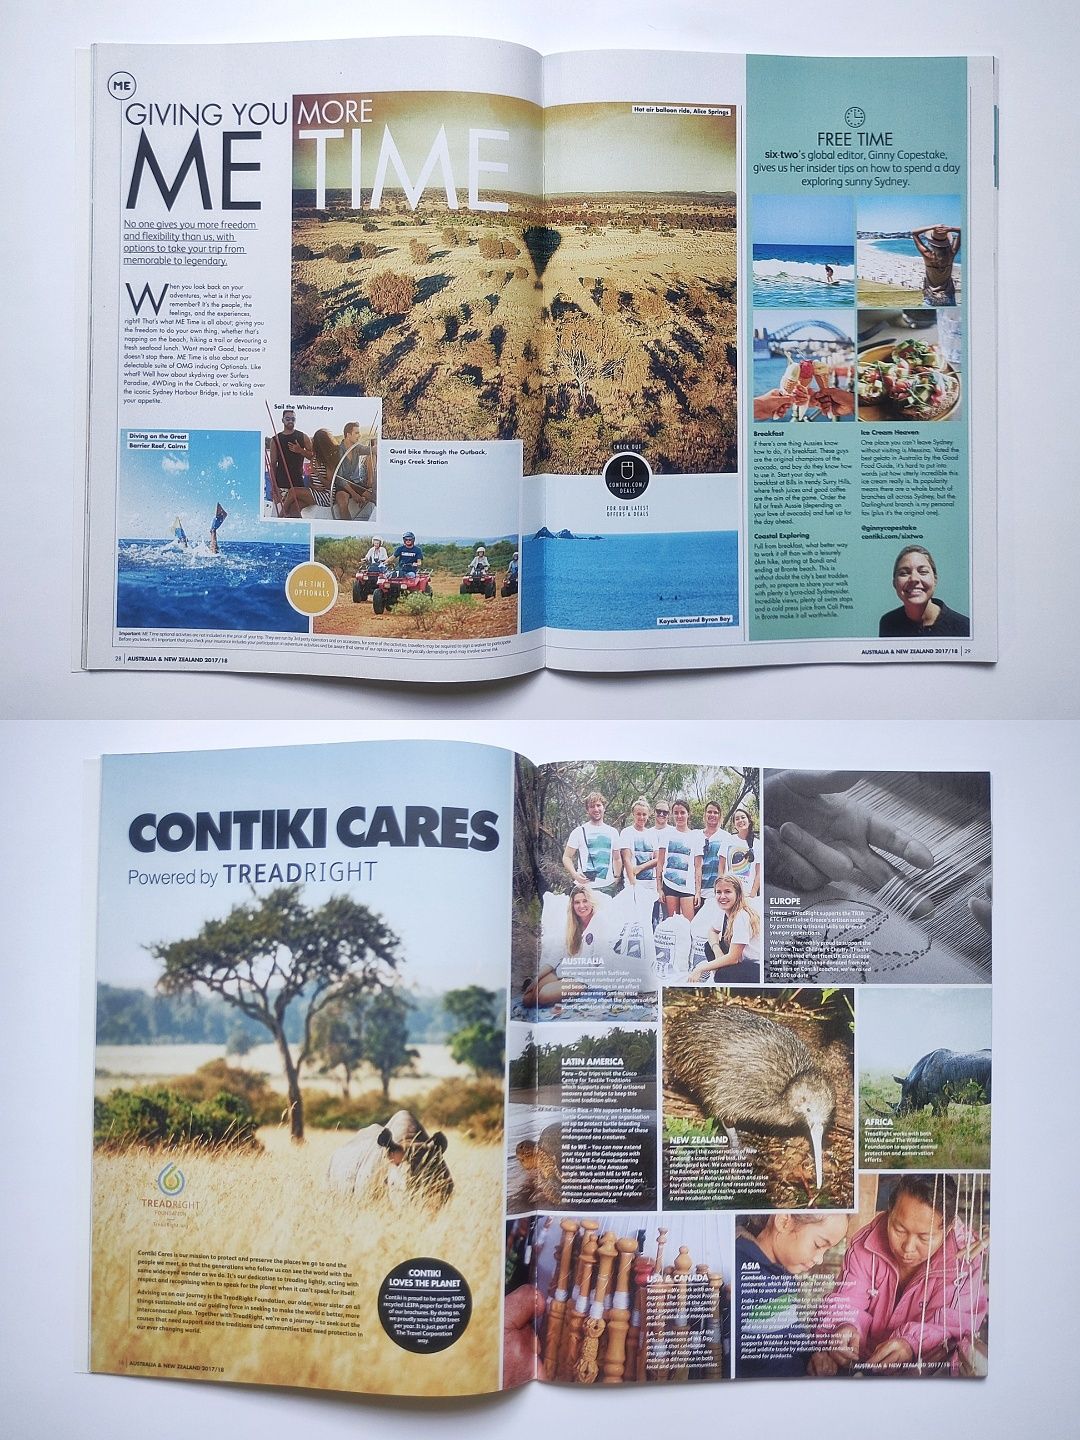 Contiki Worldwide. Стильные Журналы о Туризме и Путешествиях